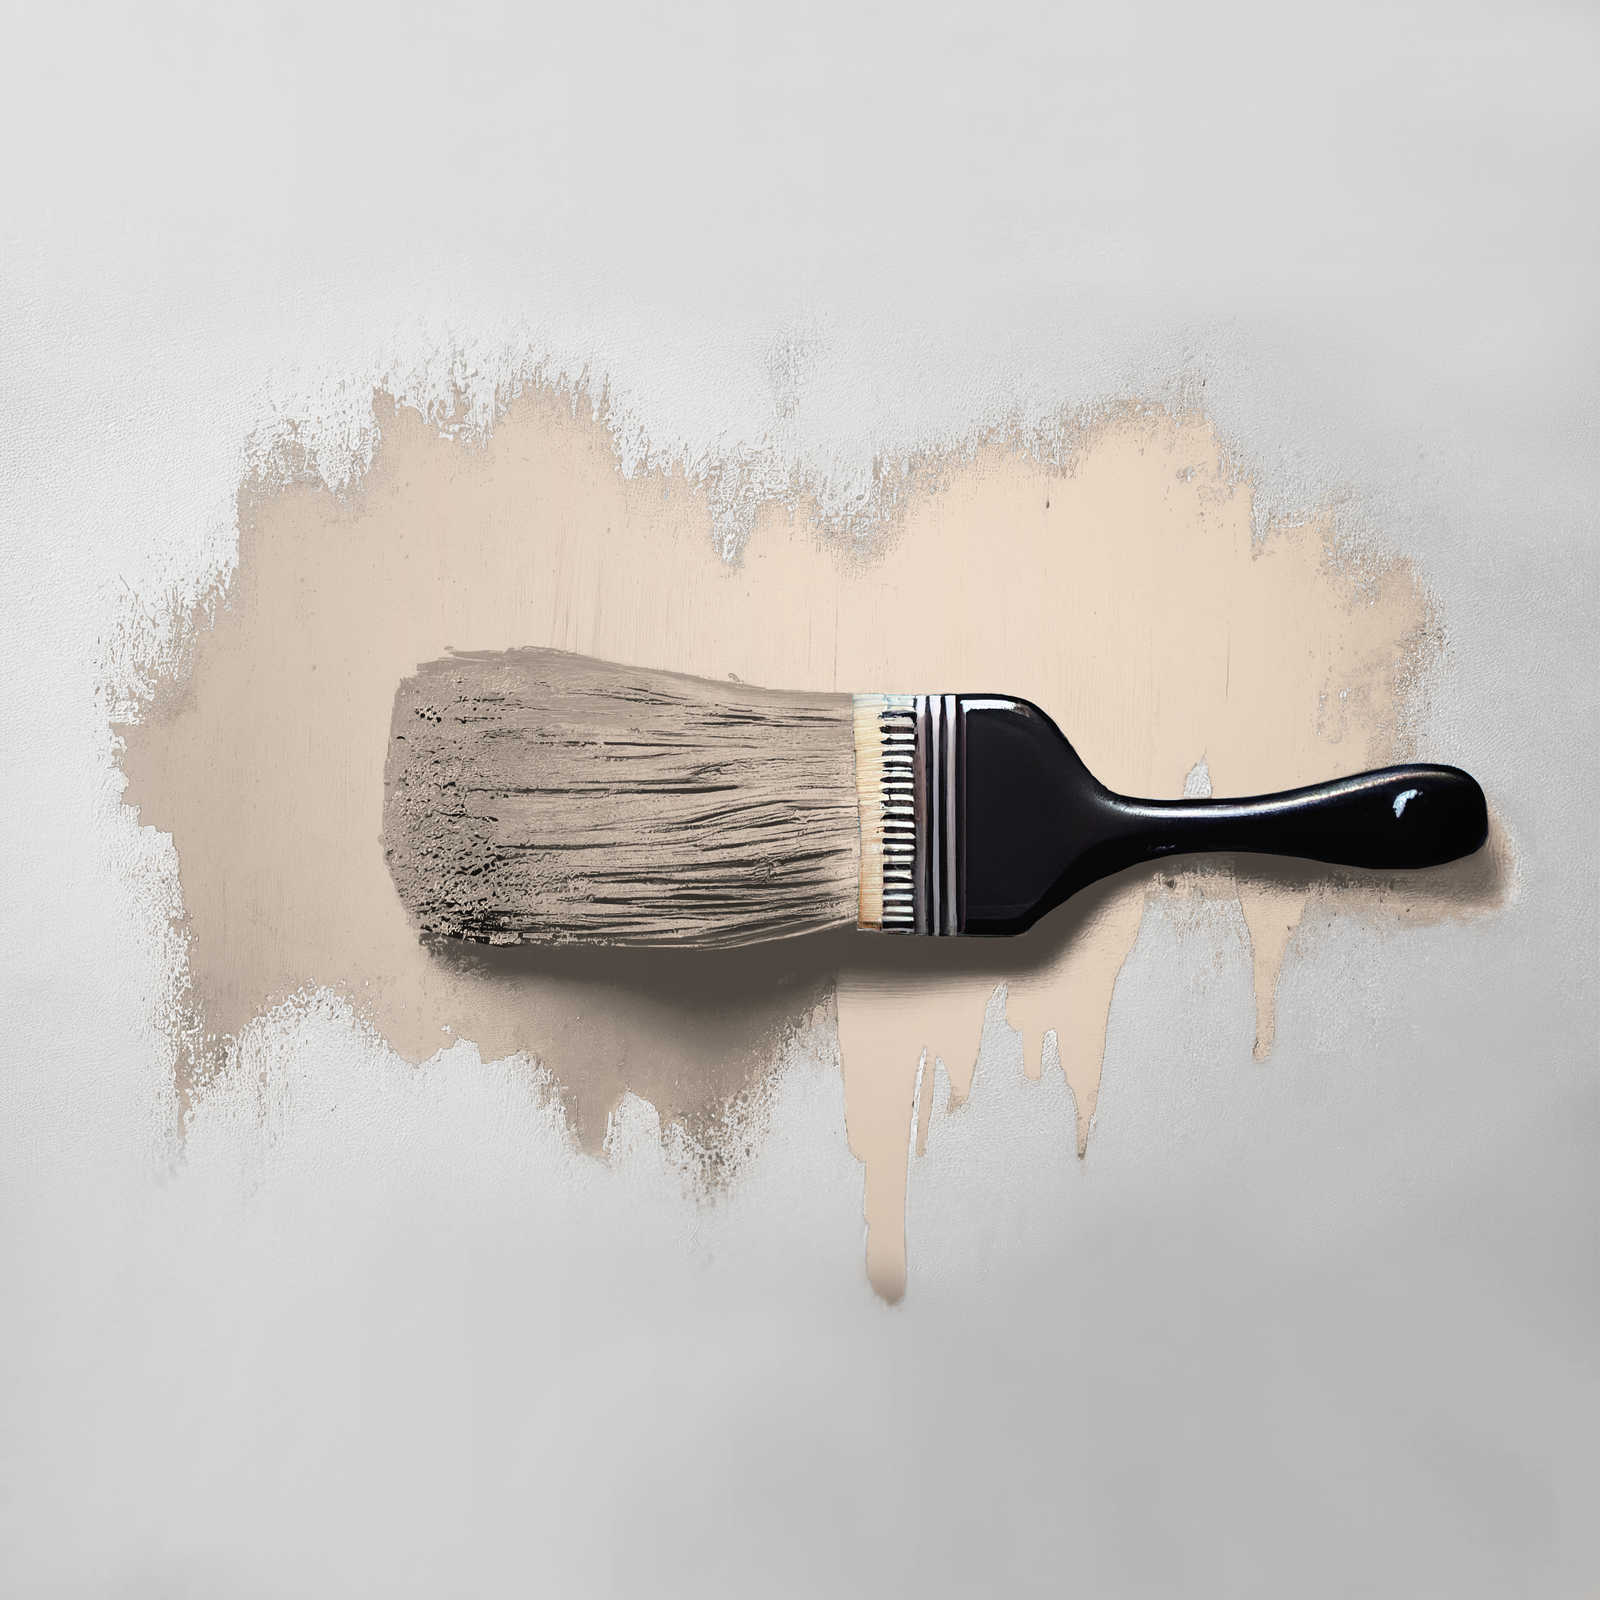             Wall Paint TCK6020 »Chalky Chickpeas« in fresh light beige – 5.0 litre
        